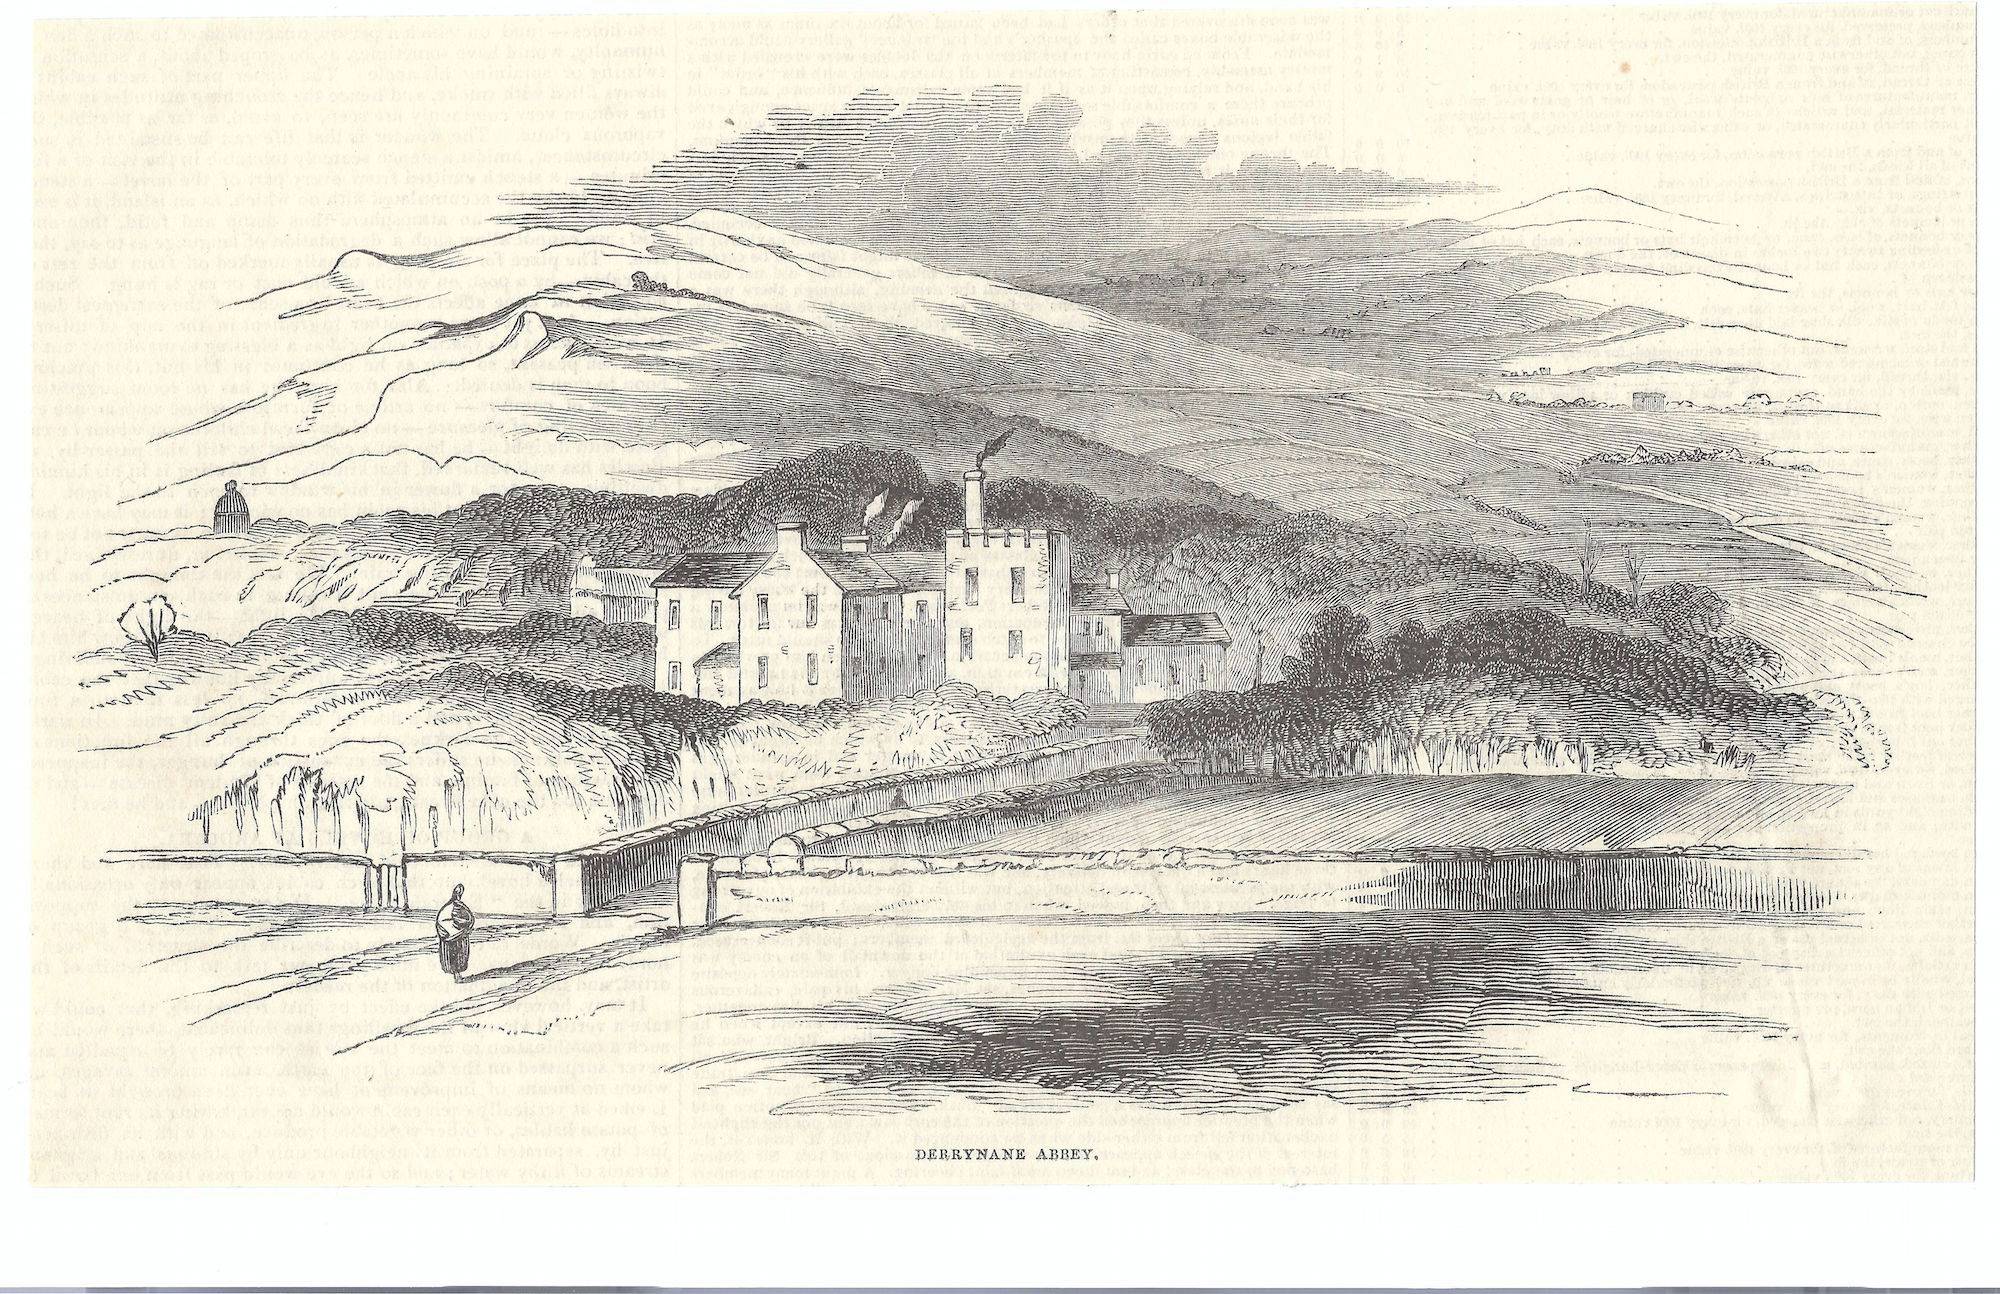 Derrynane Abbey, 1846. OPW.